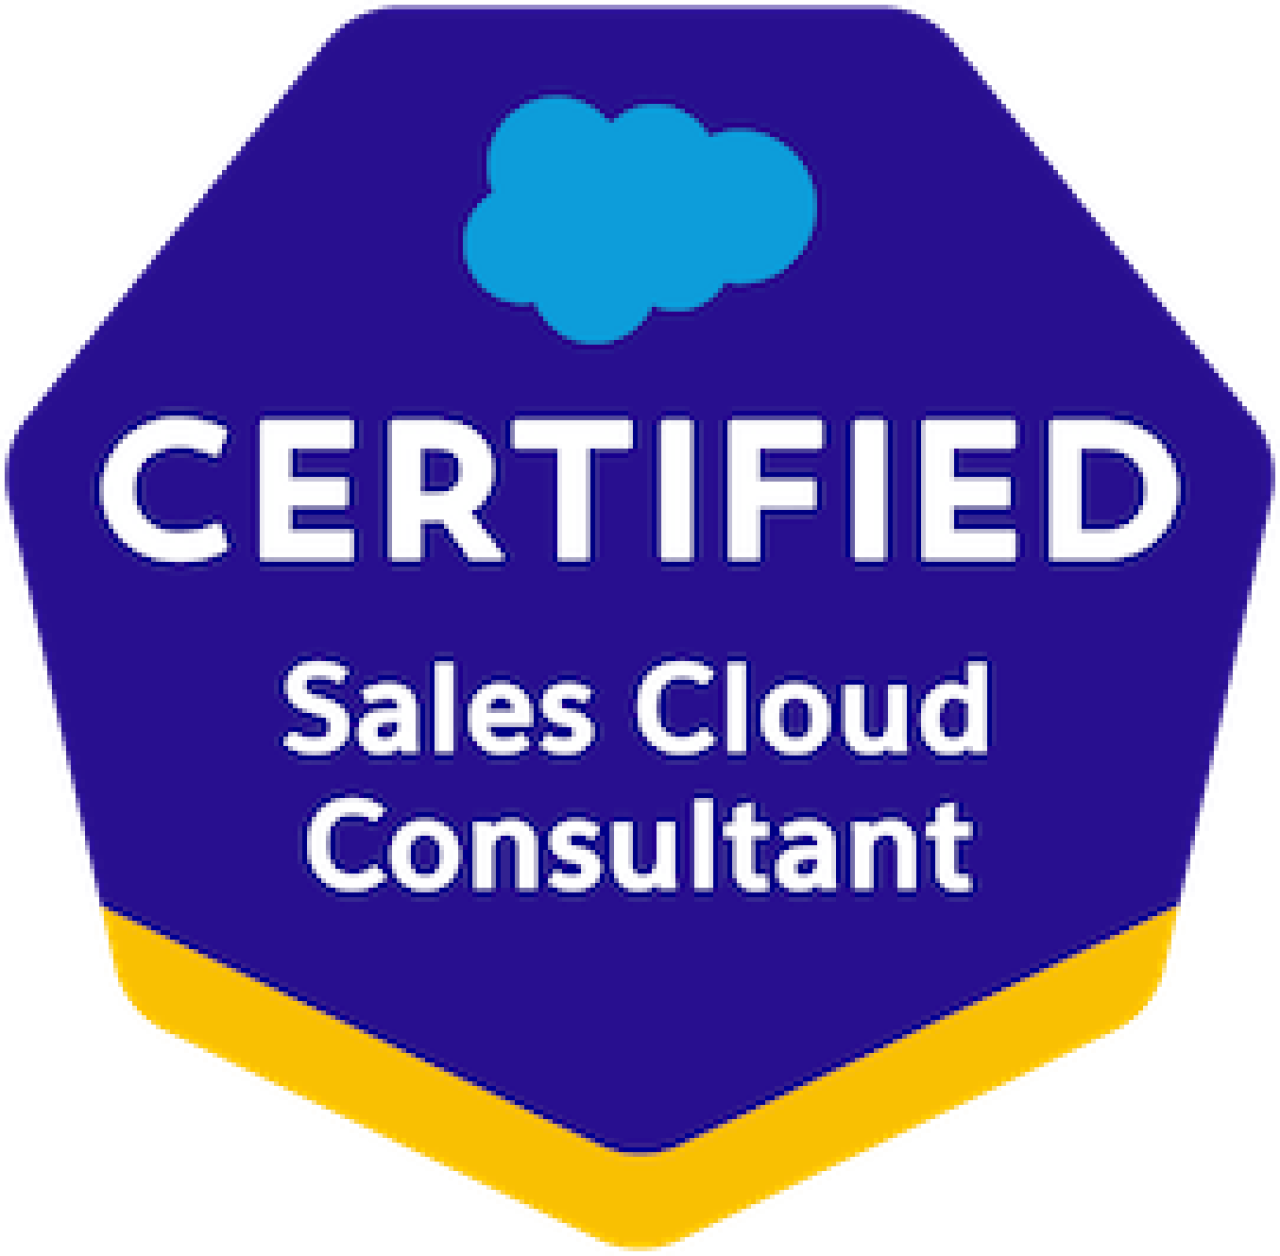 Salesforce Certified Sales Cloud Consultant.